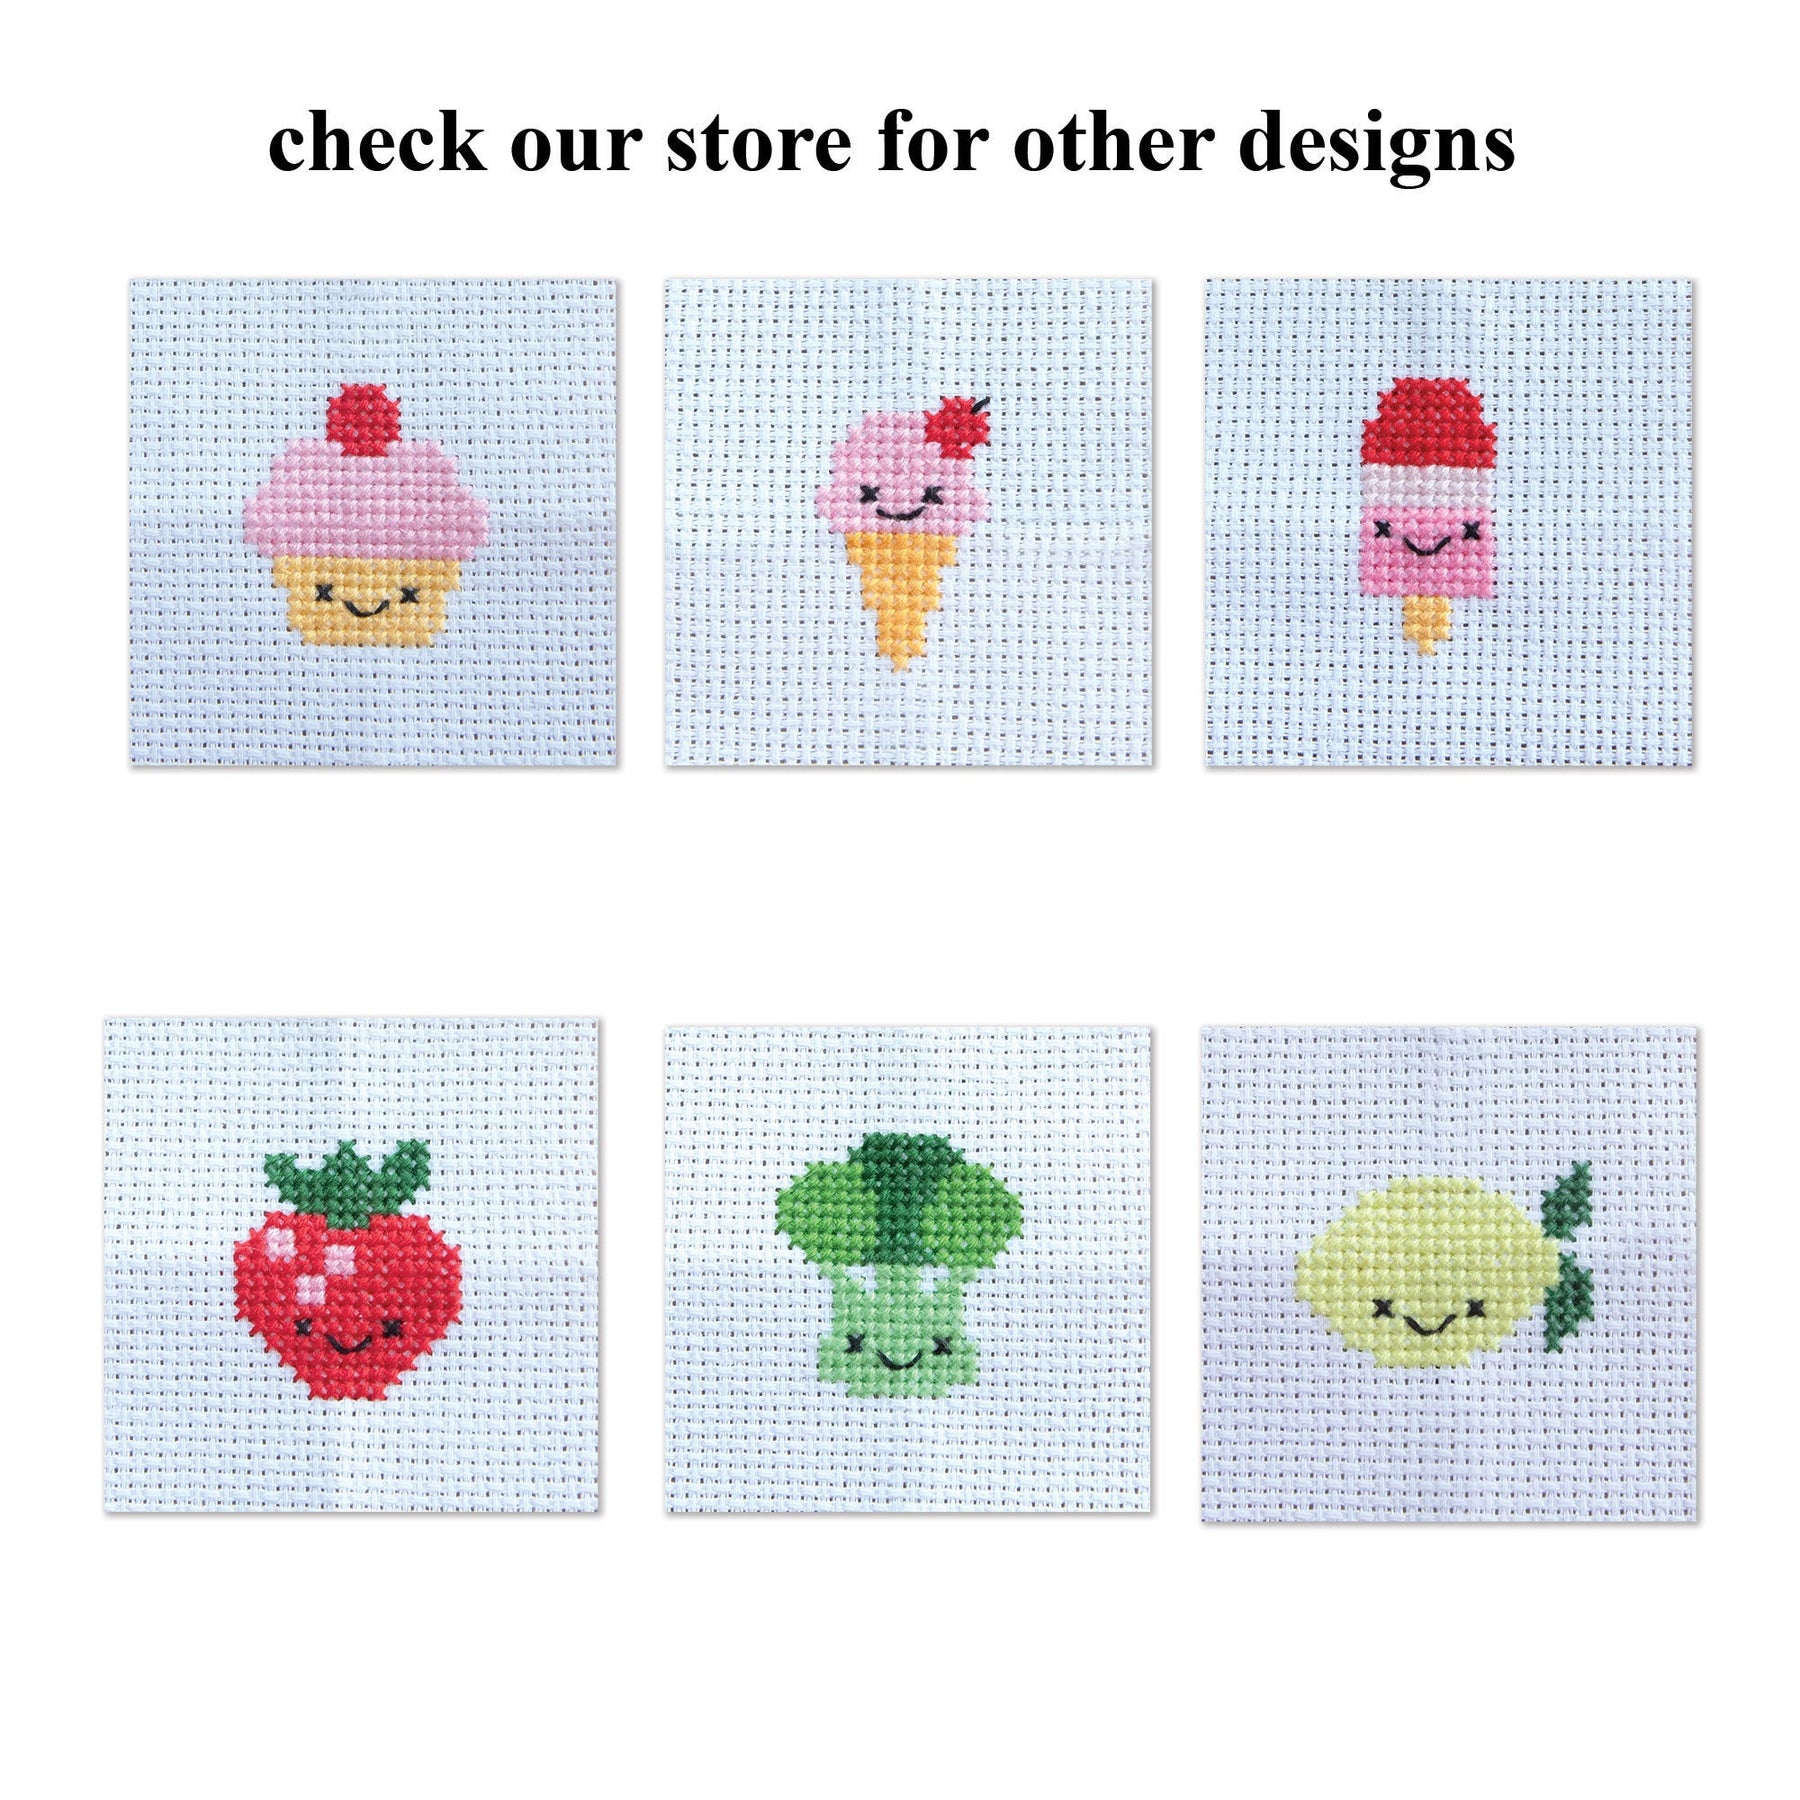 Mini Cross Stitch Kit With Kawaii Broccoli Design